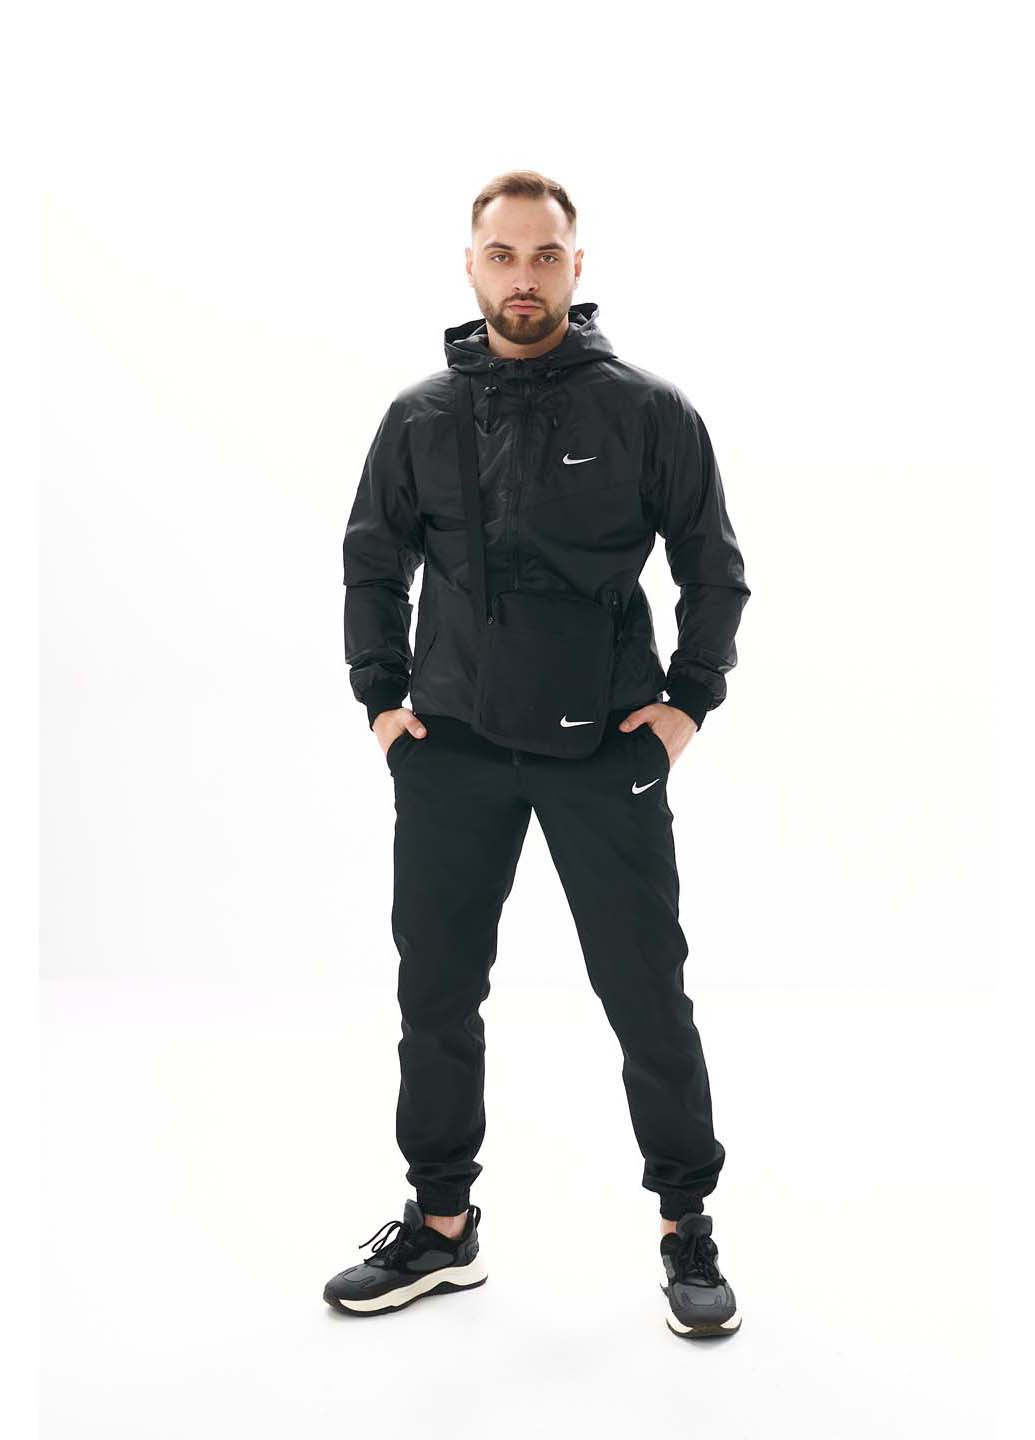 Черный демисезонный комплект windrunner + штаны president барсетка Nike